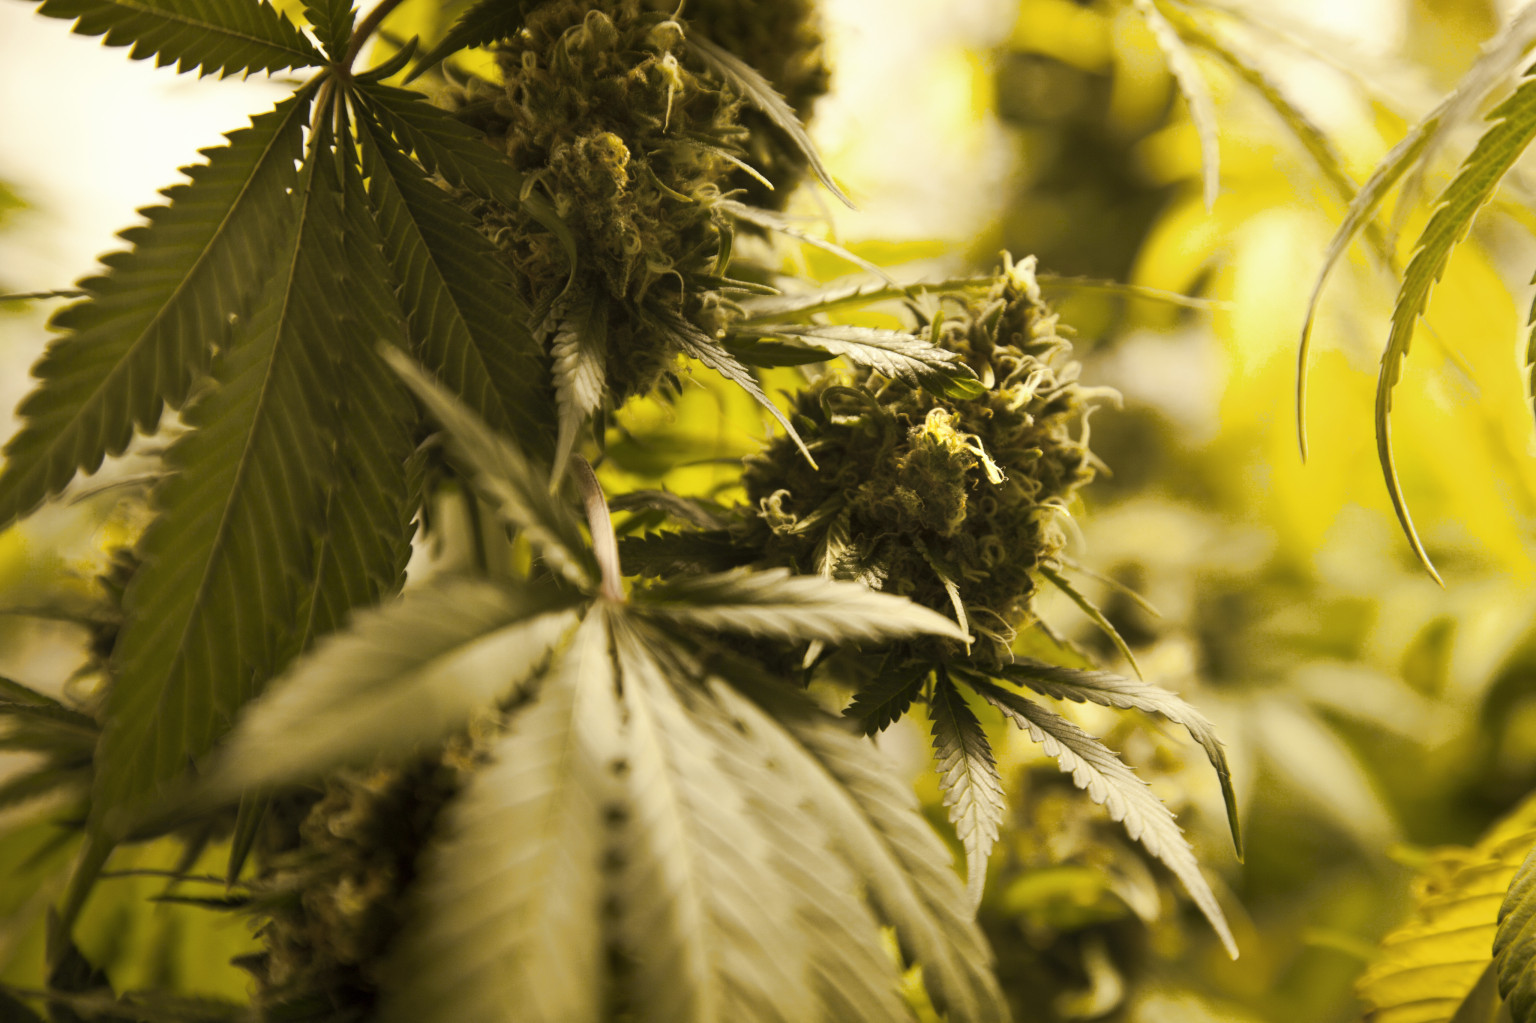 Discursive essay on legalising cannabis